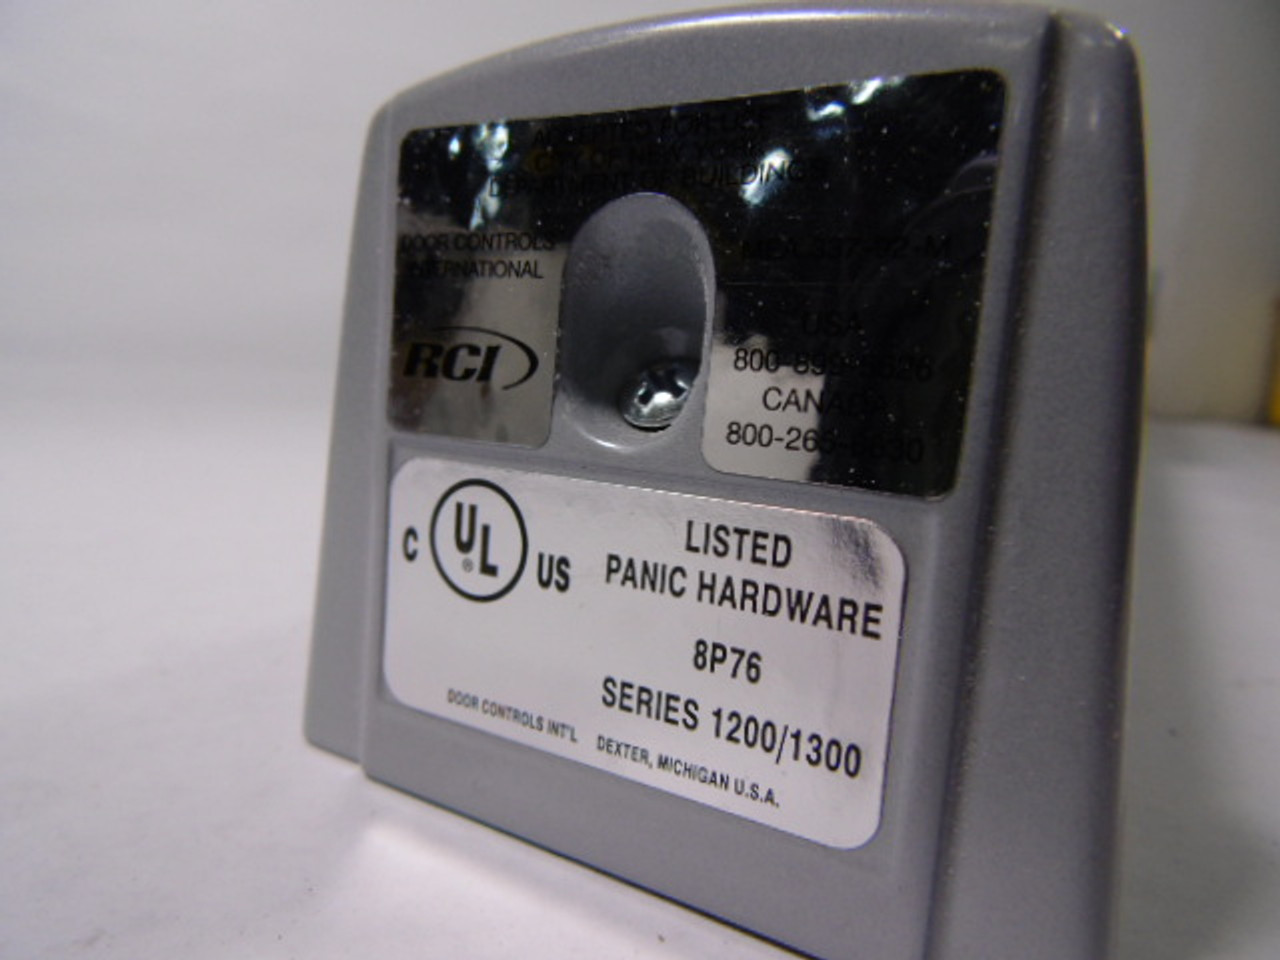 RCI 1200XSS1 Signal Switch SPDT Panic Bar ! NEW !